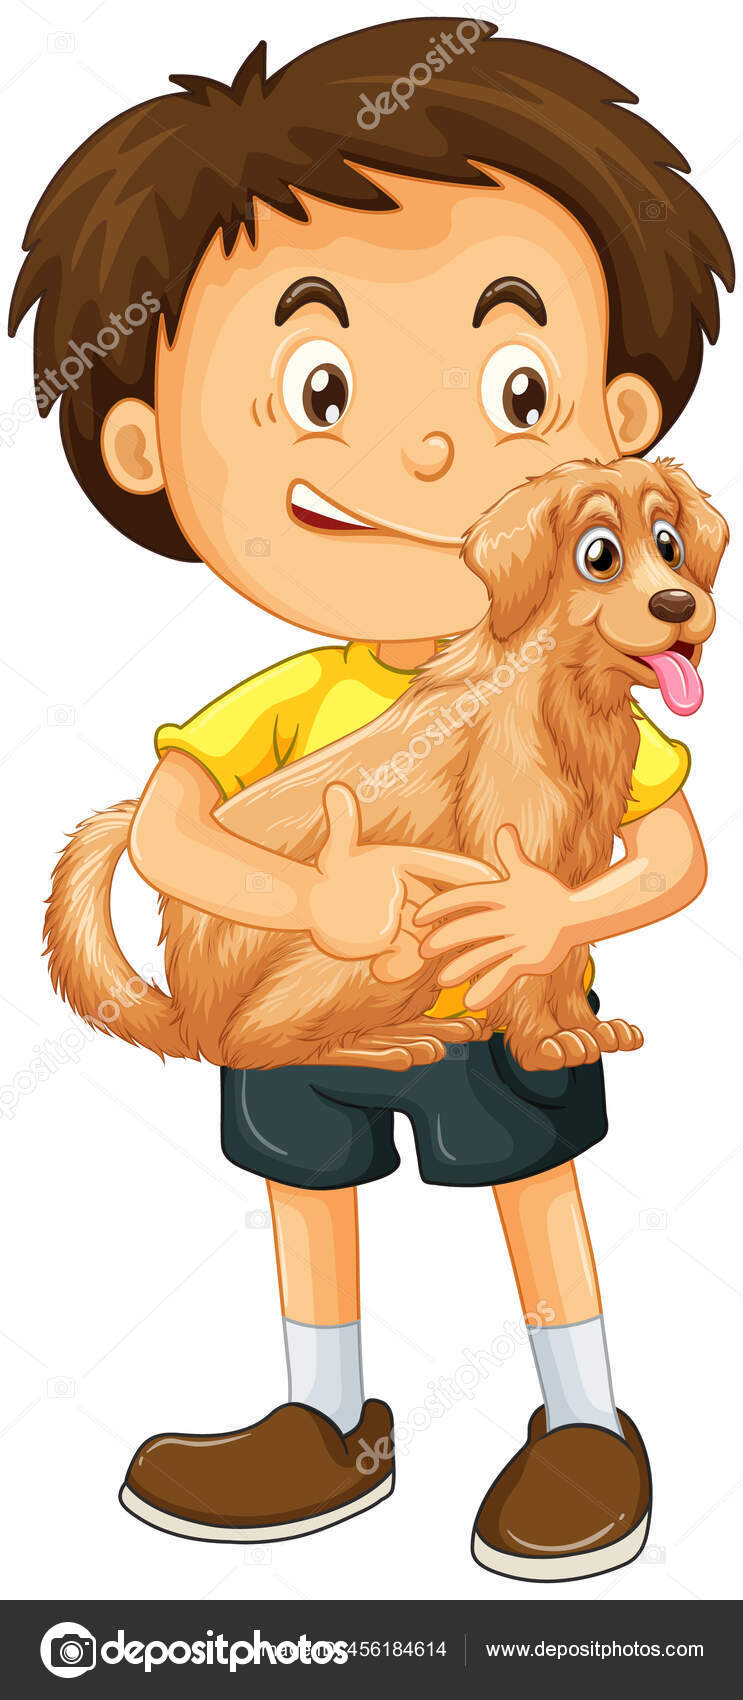 Anak Laki Laki Bahagia Karakter Kartun Memeluk Ilustrasi Anjing Lucu Stok Vektor Interactimages 456184614